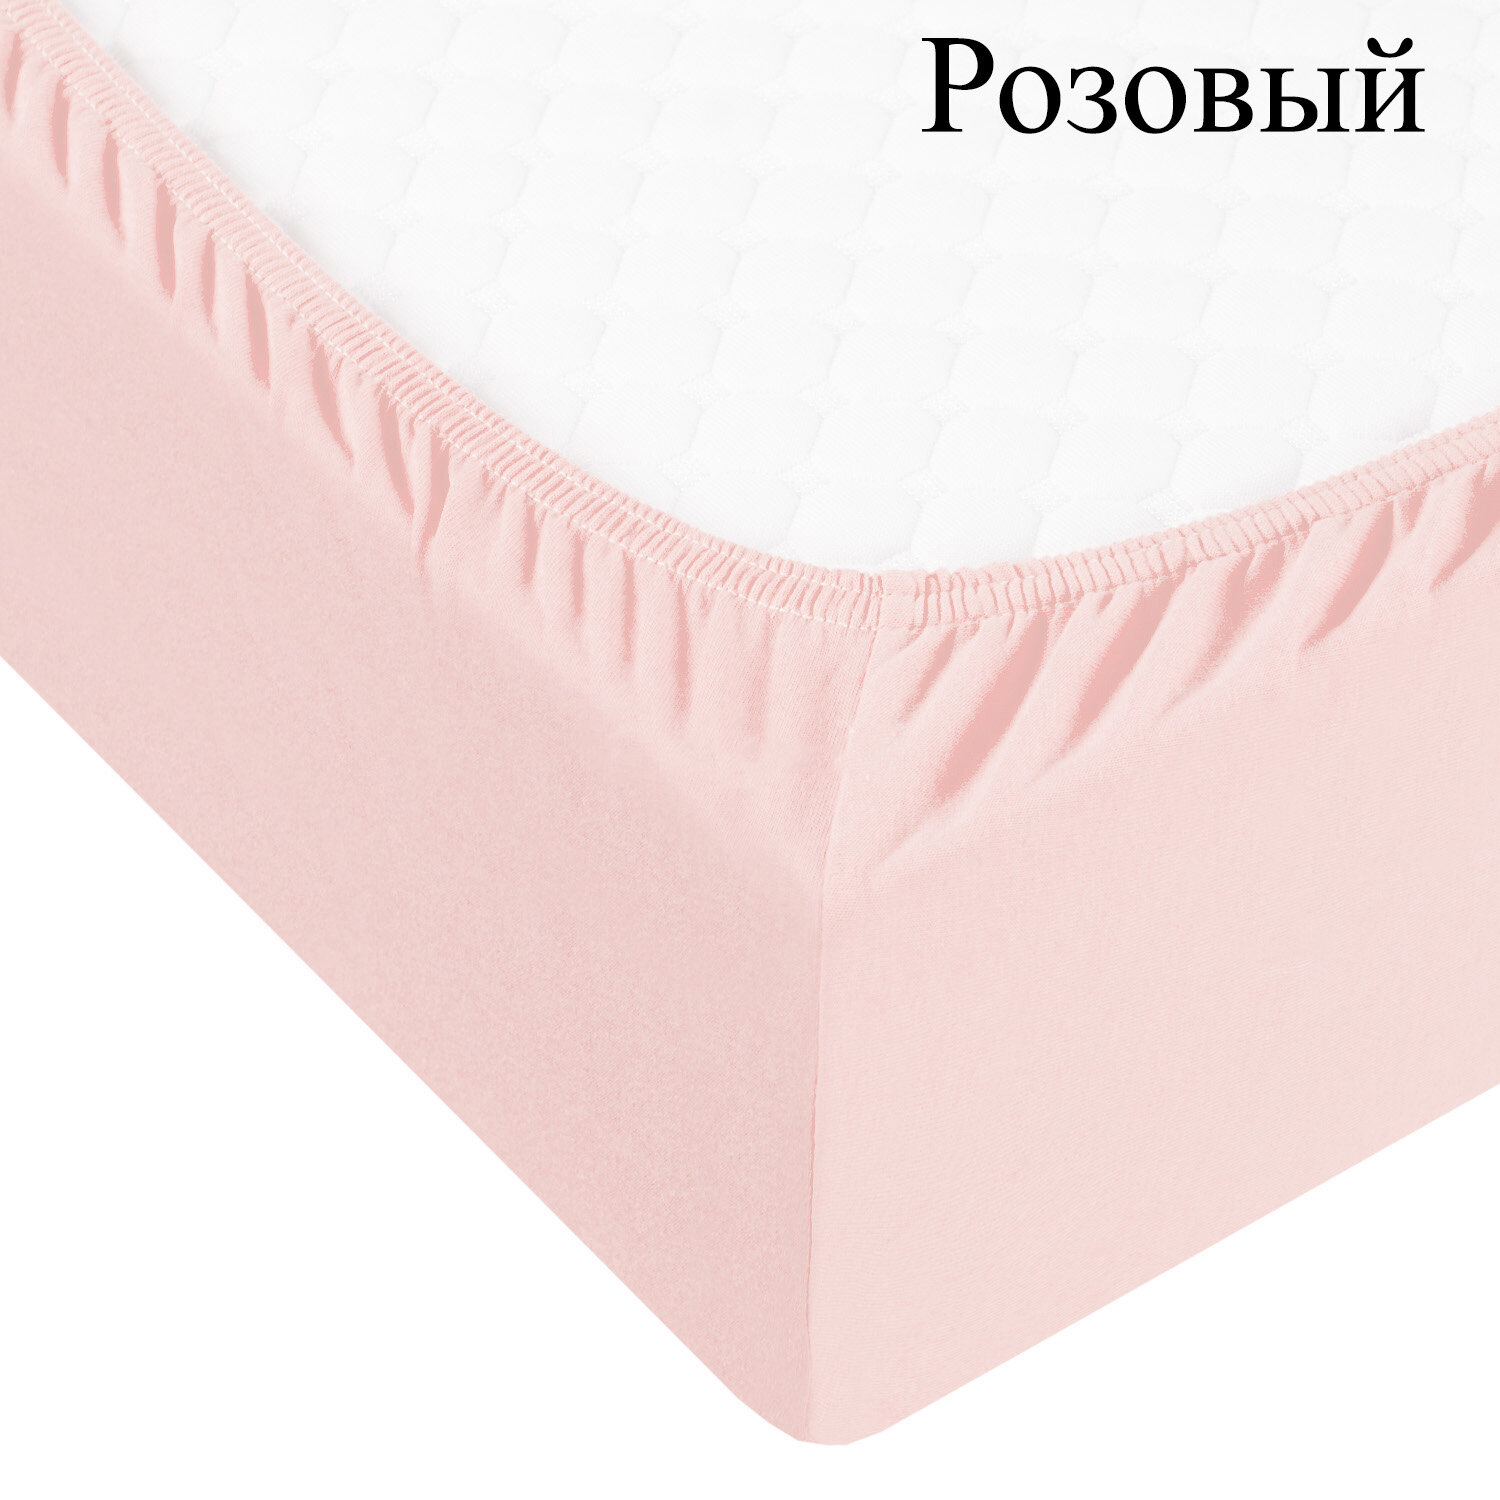 Простыня на резинке Boaz Цвет: Розовый (120х200), размер 120х200 adl595809 Простыня на резинке Boaz Цвет: Розовый (120х200) - фото 1